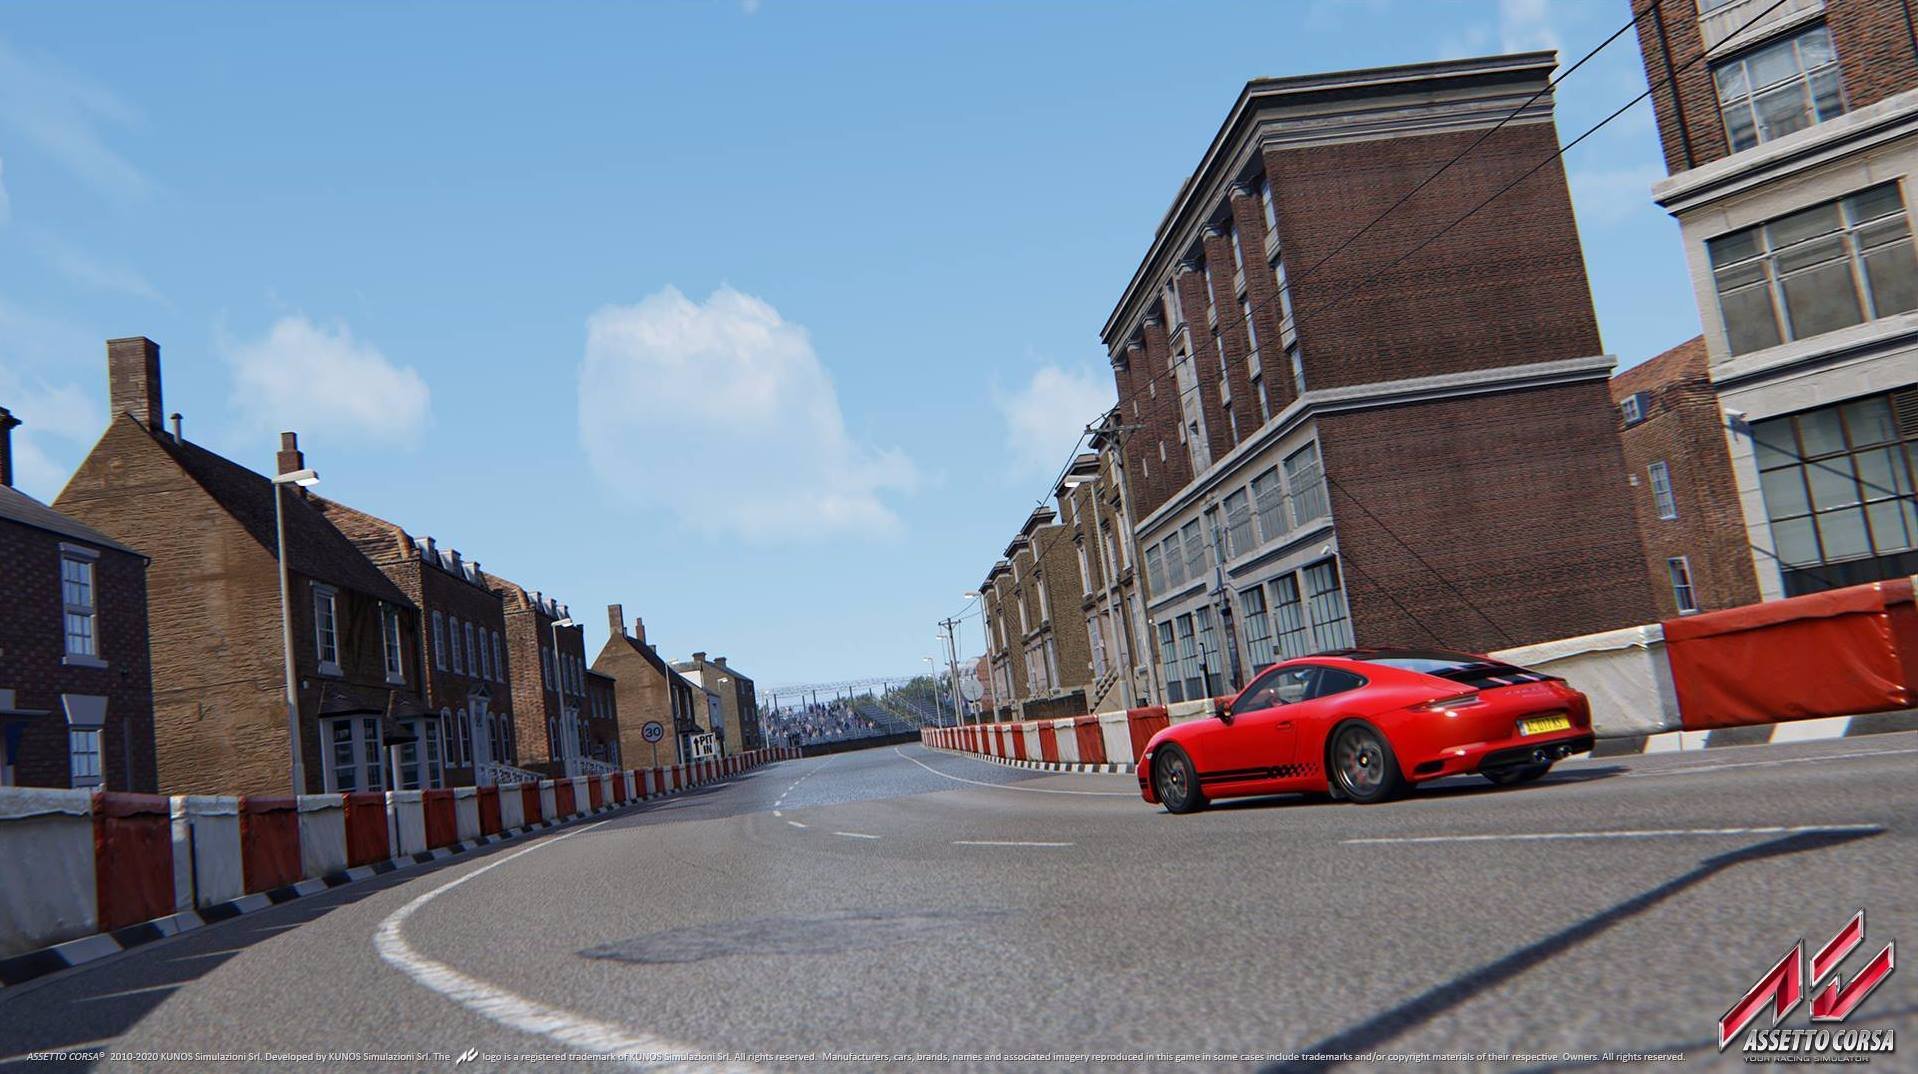 More information about "Assetto Corsa: update 1.14 disponibile su PS4 !"